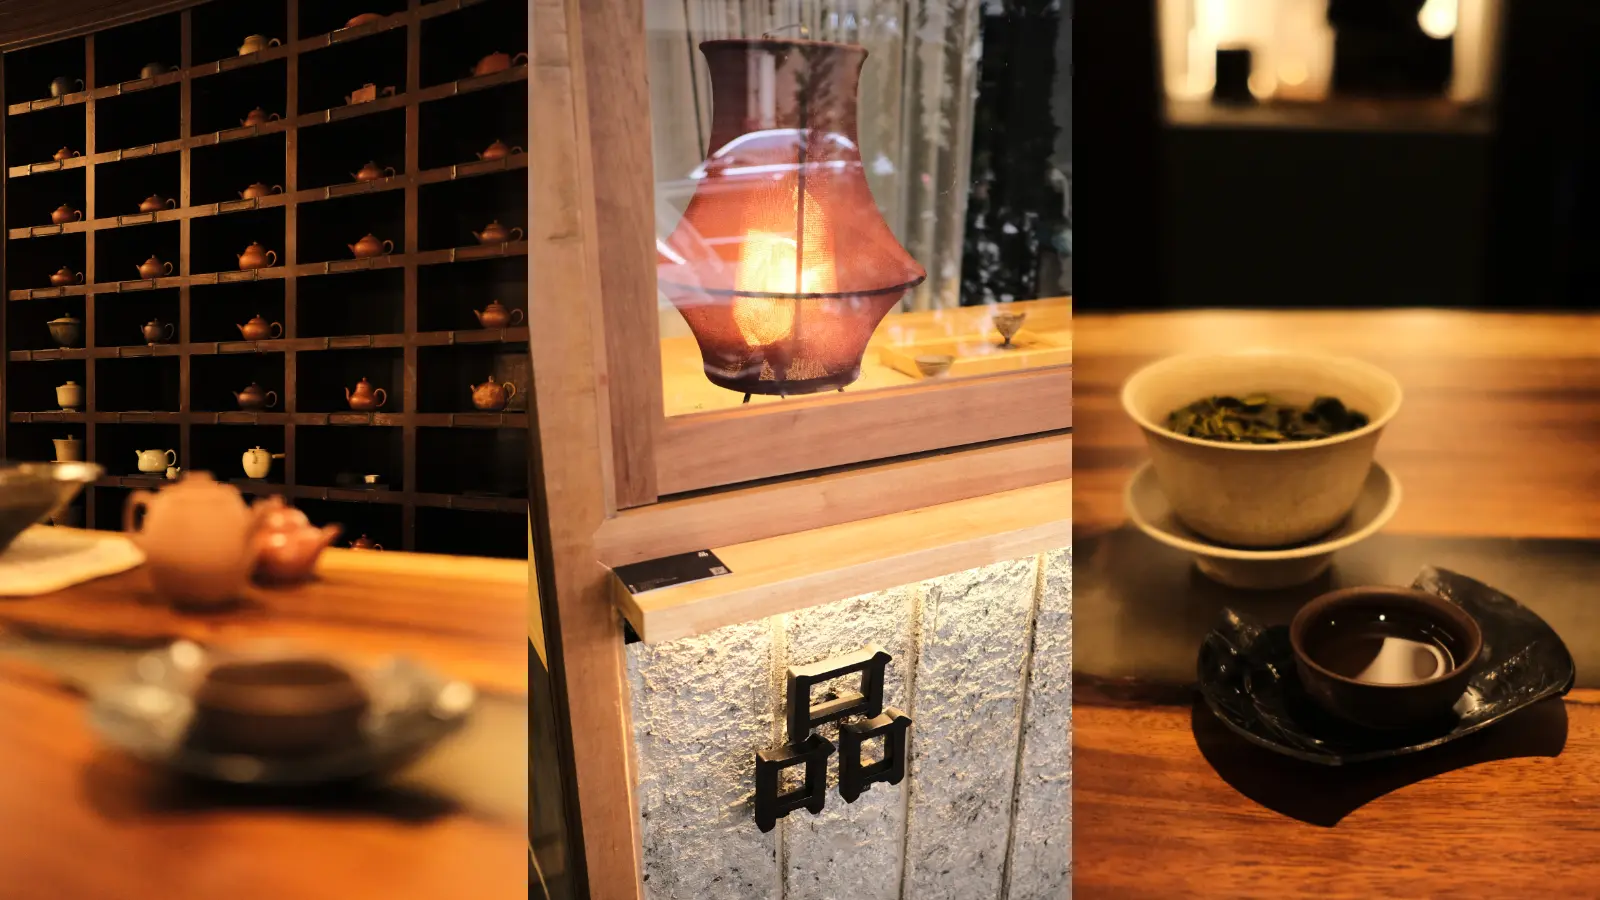 zhong/tea.nity Bangkok – A traditional tea room with an urban twist